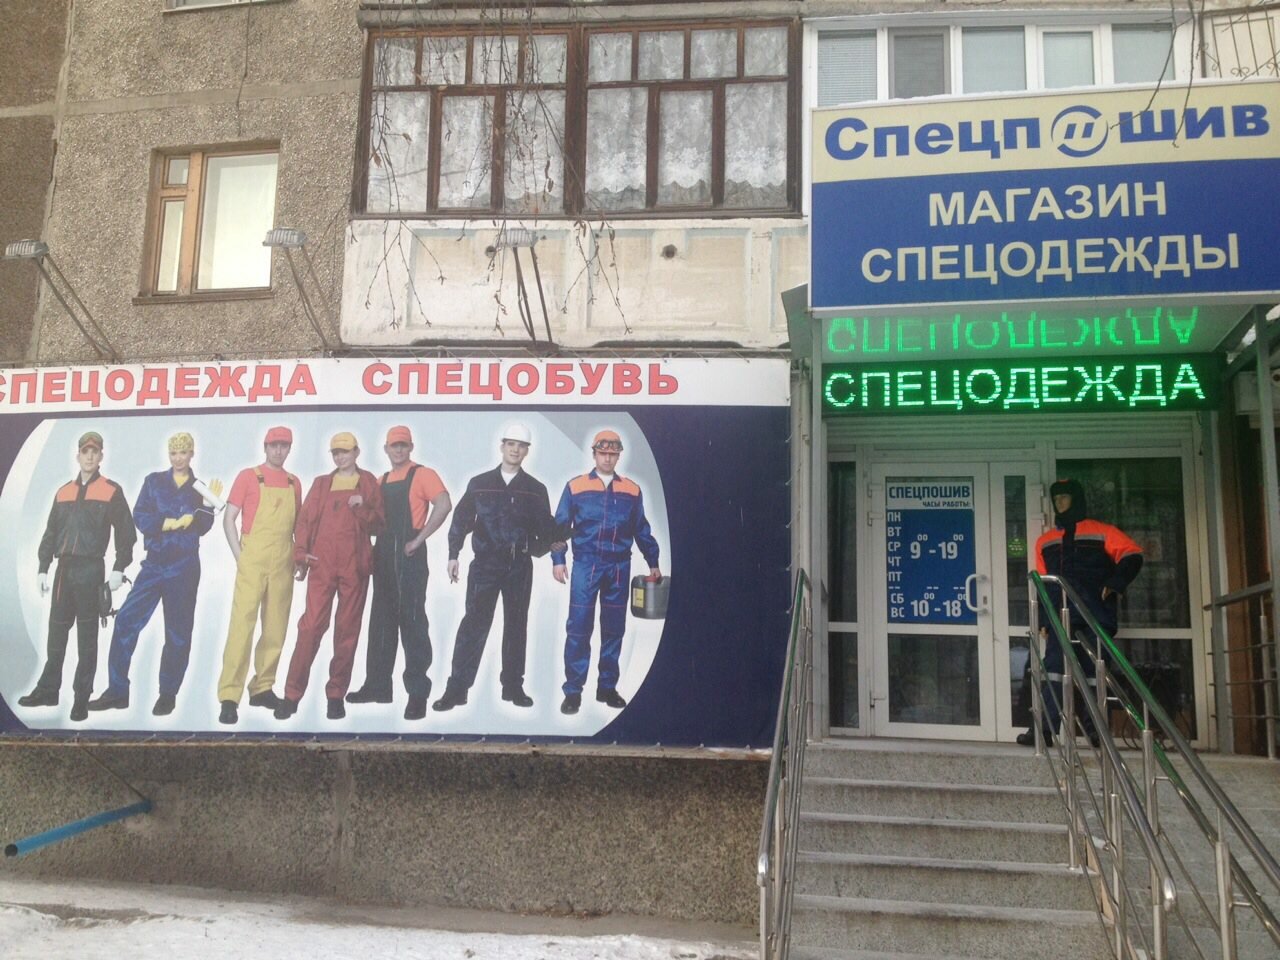 Вход в магазин "Спецпошив" на Пермякова в Тюмени